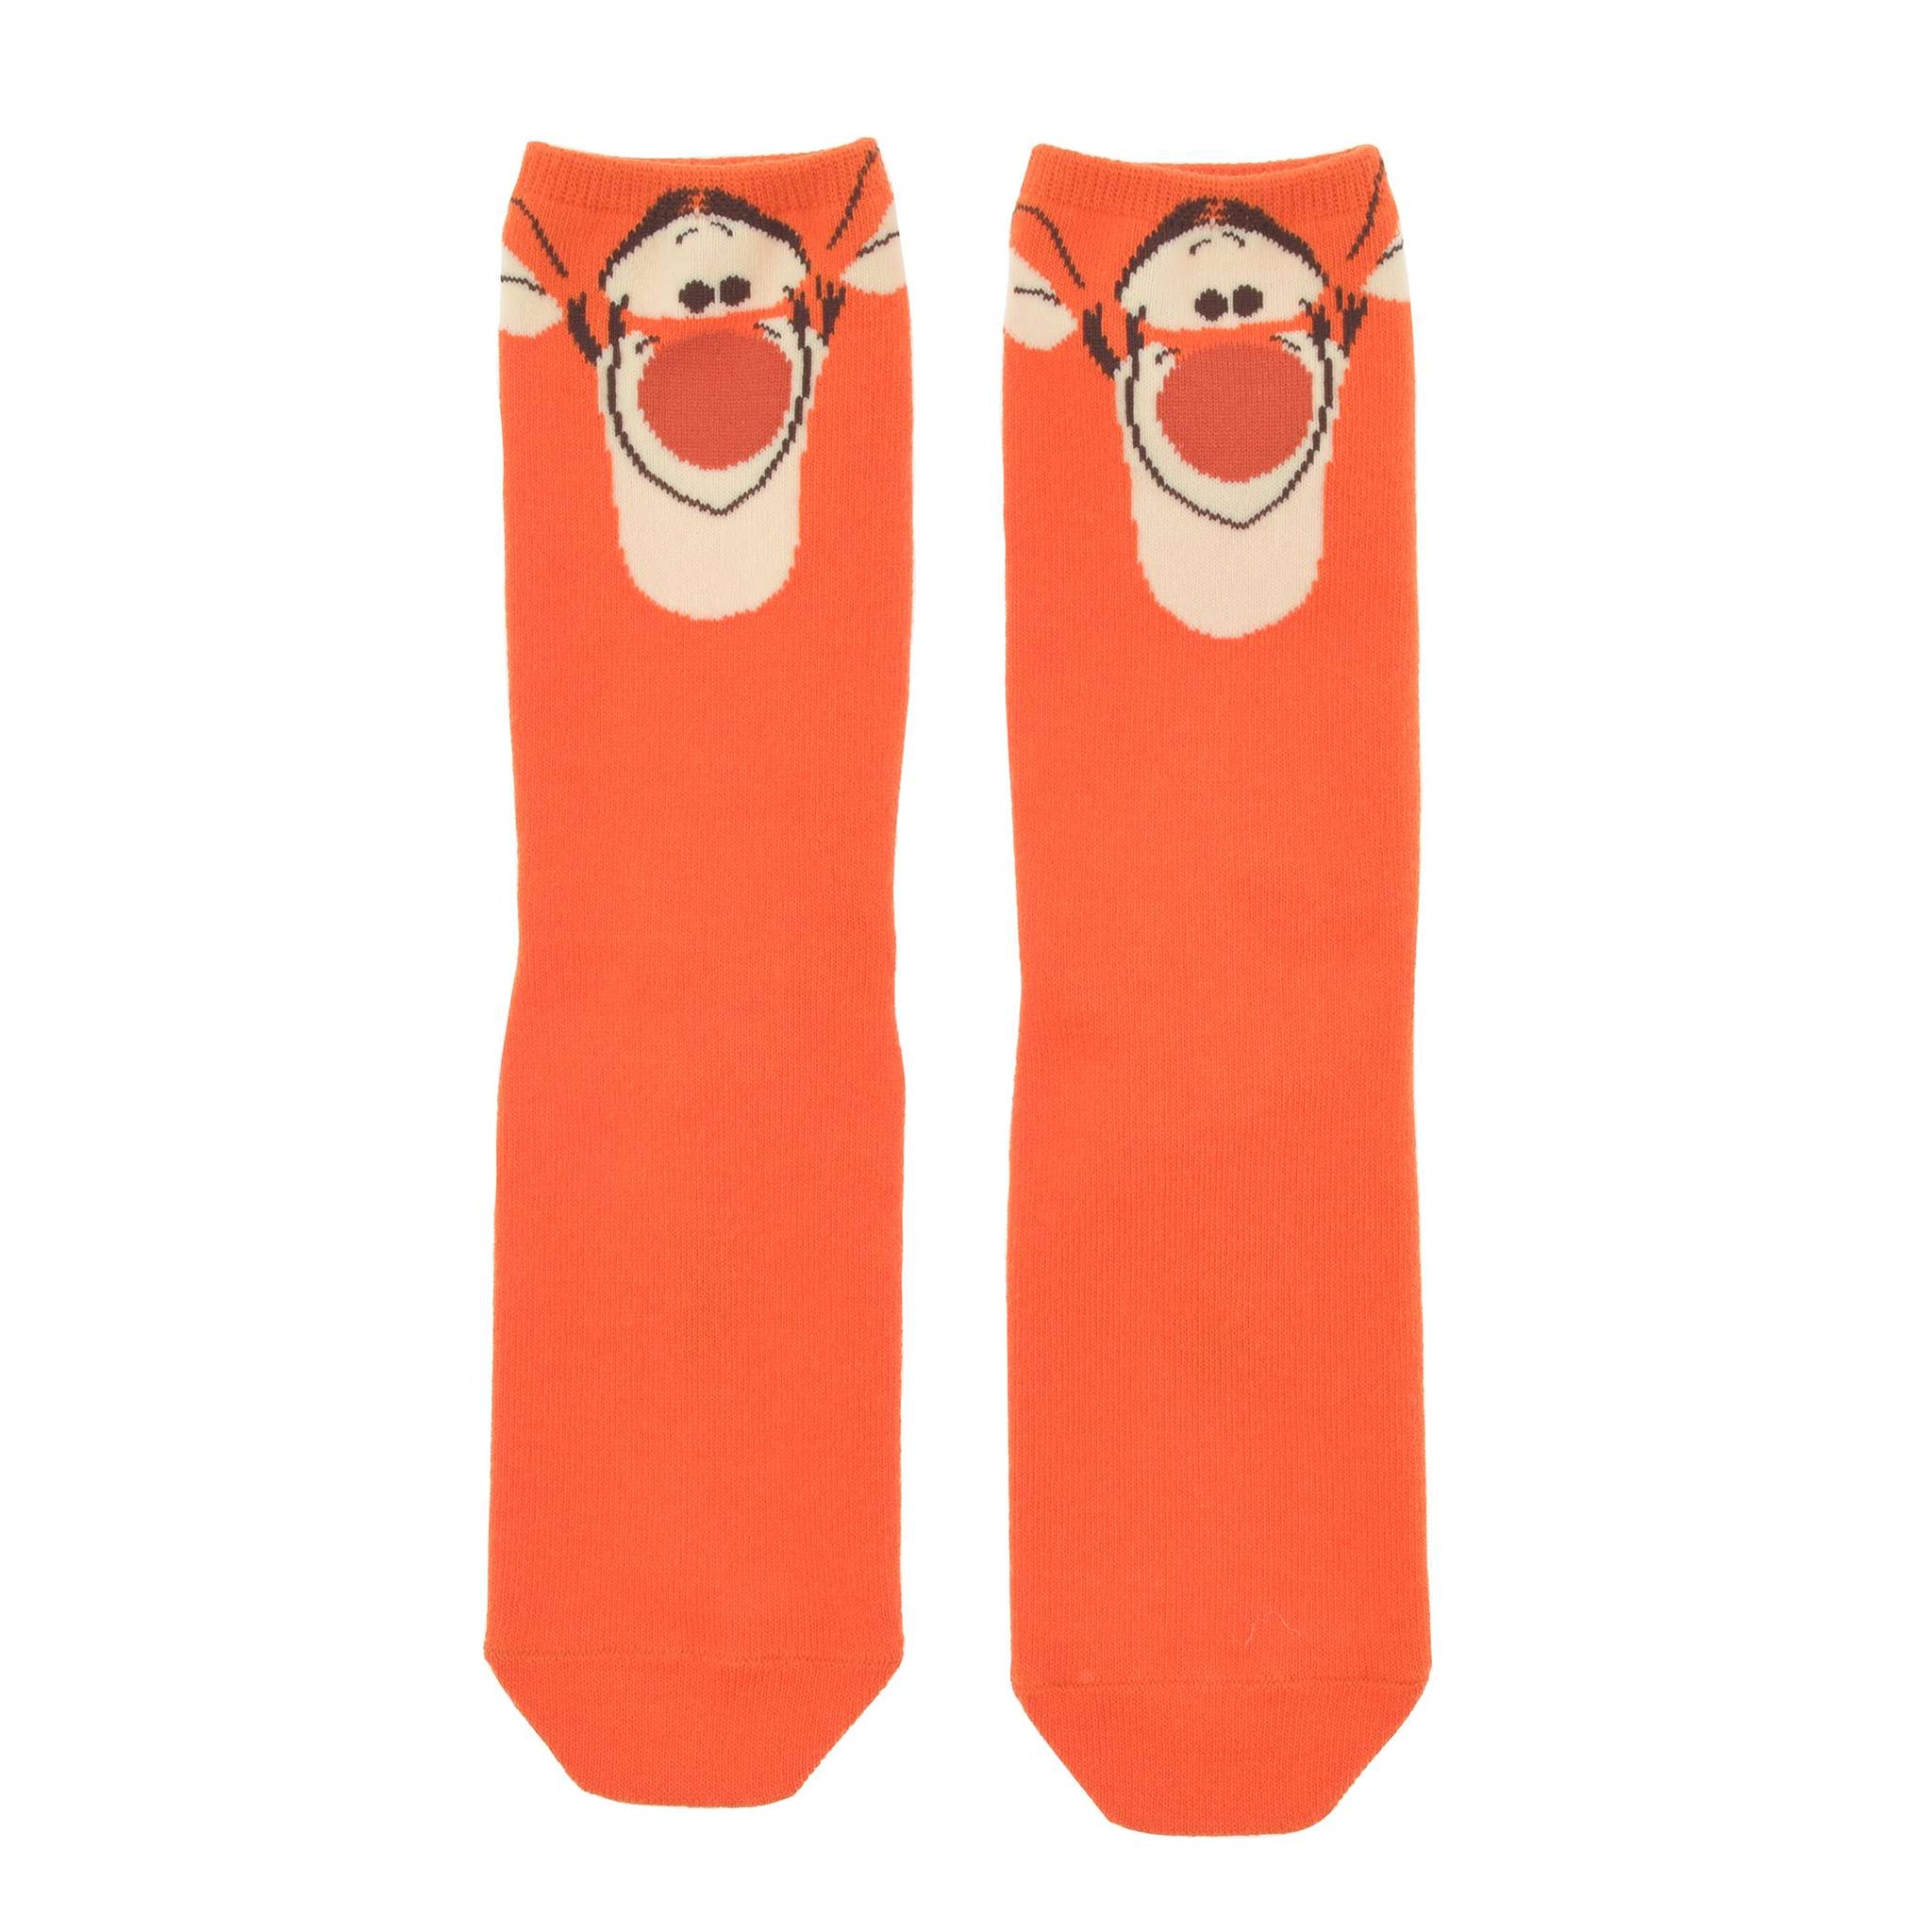 Disney Store - Tigger Socks Face Winnie the Pooh Orange 36-39 - Socks 